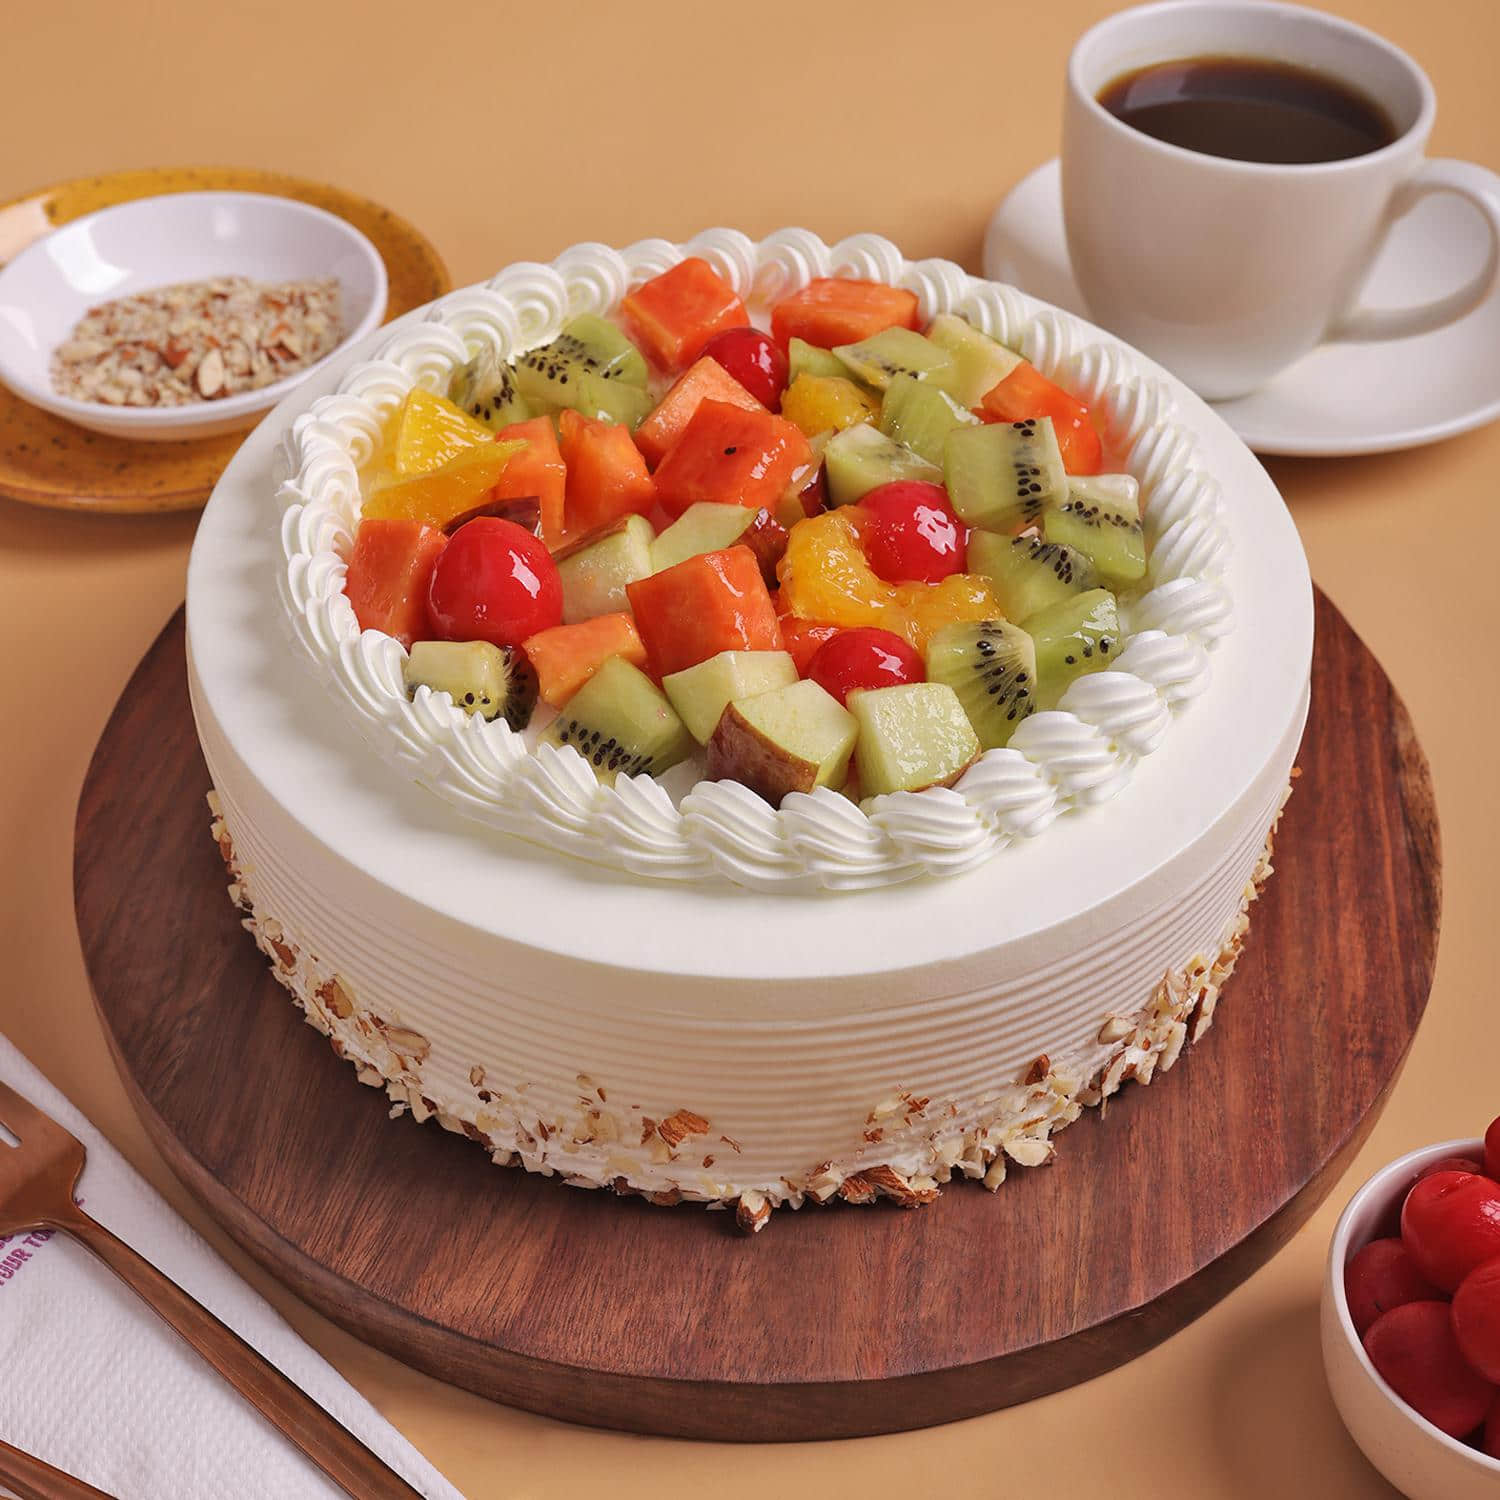 Winni – Cake & Flowers – Celebrate Relations!